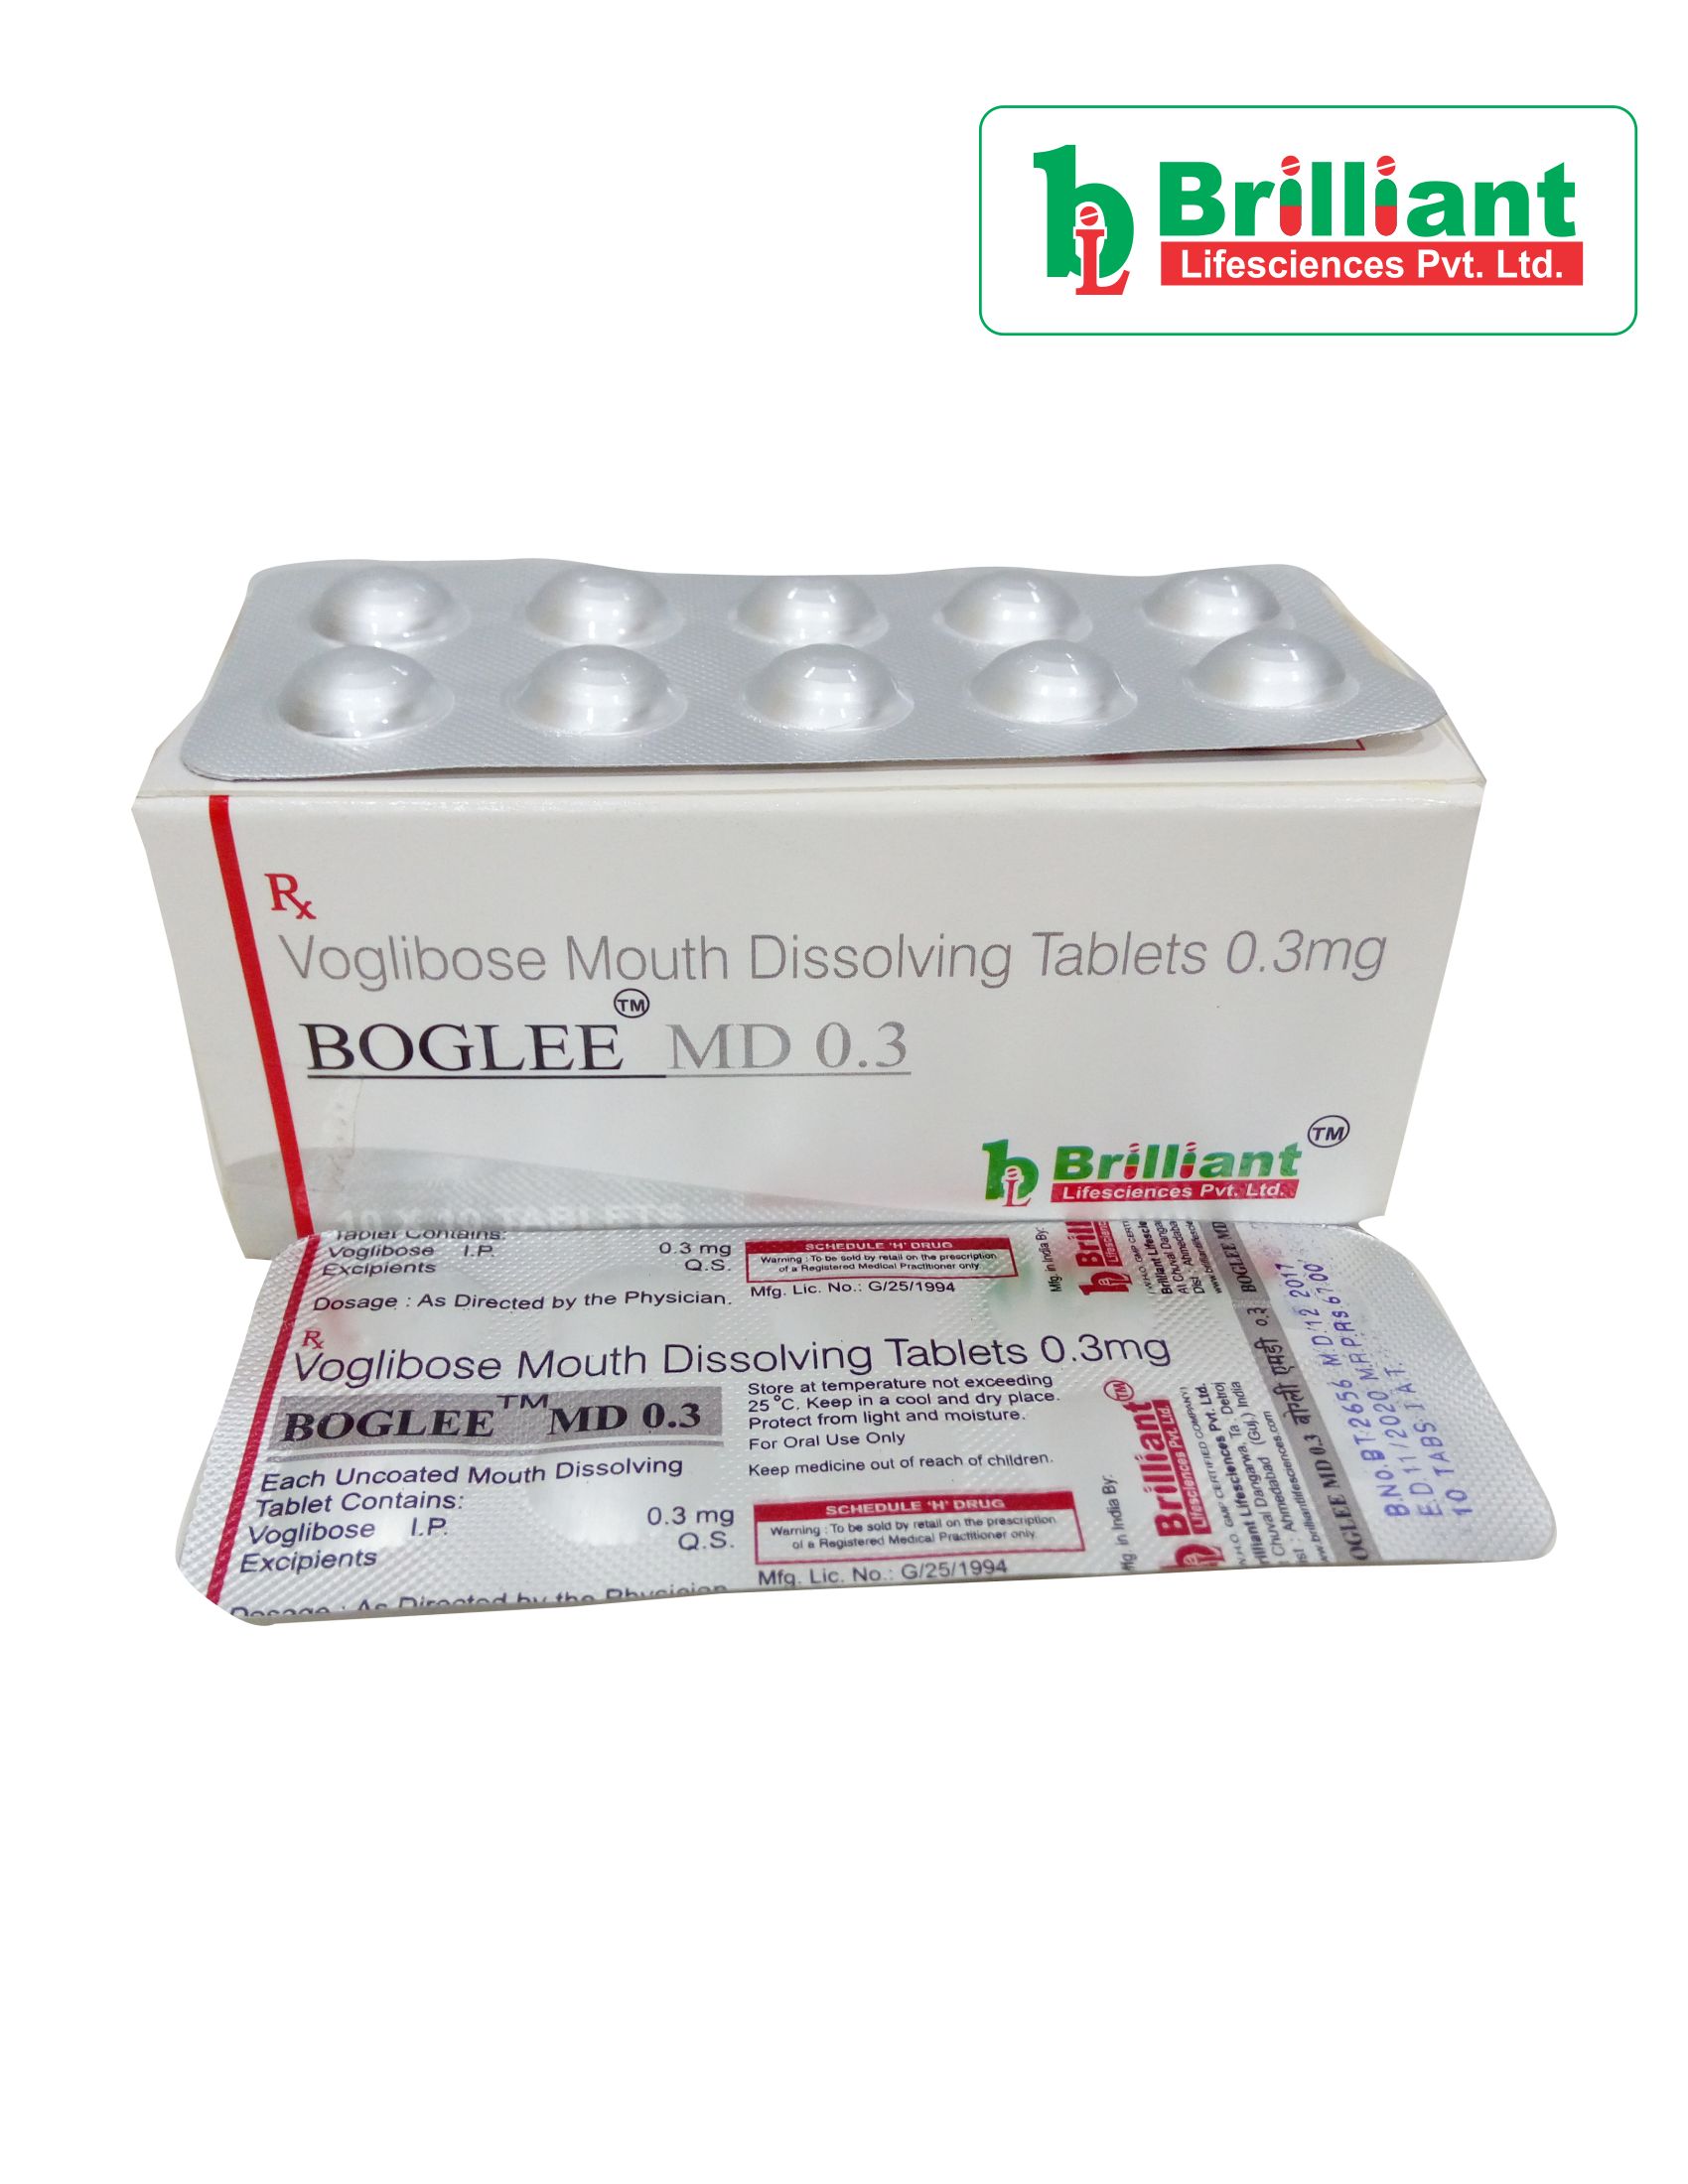 Cenforce 100 mg price in india